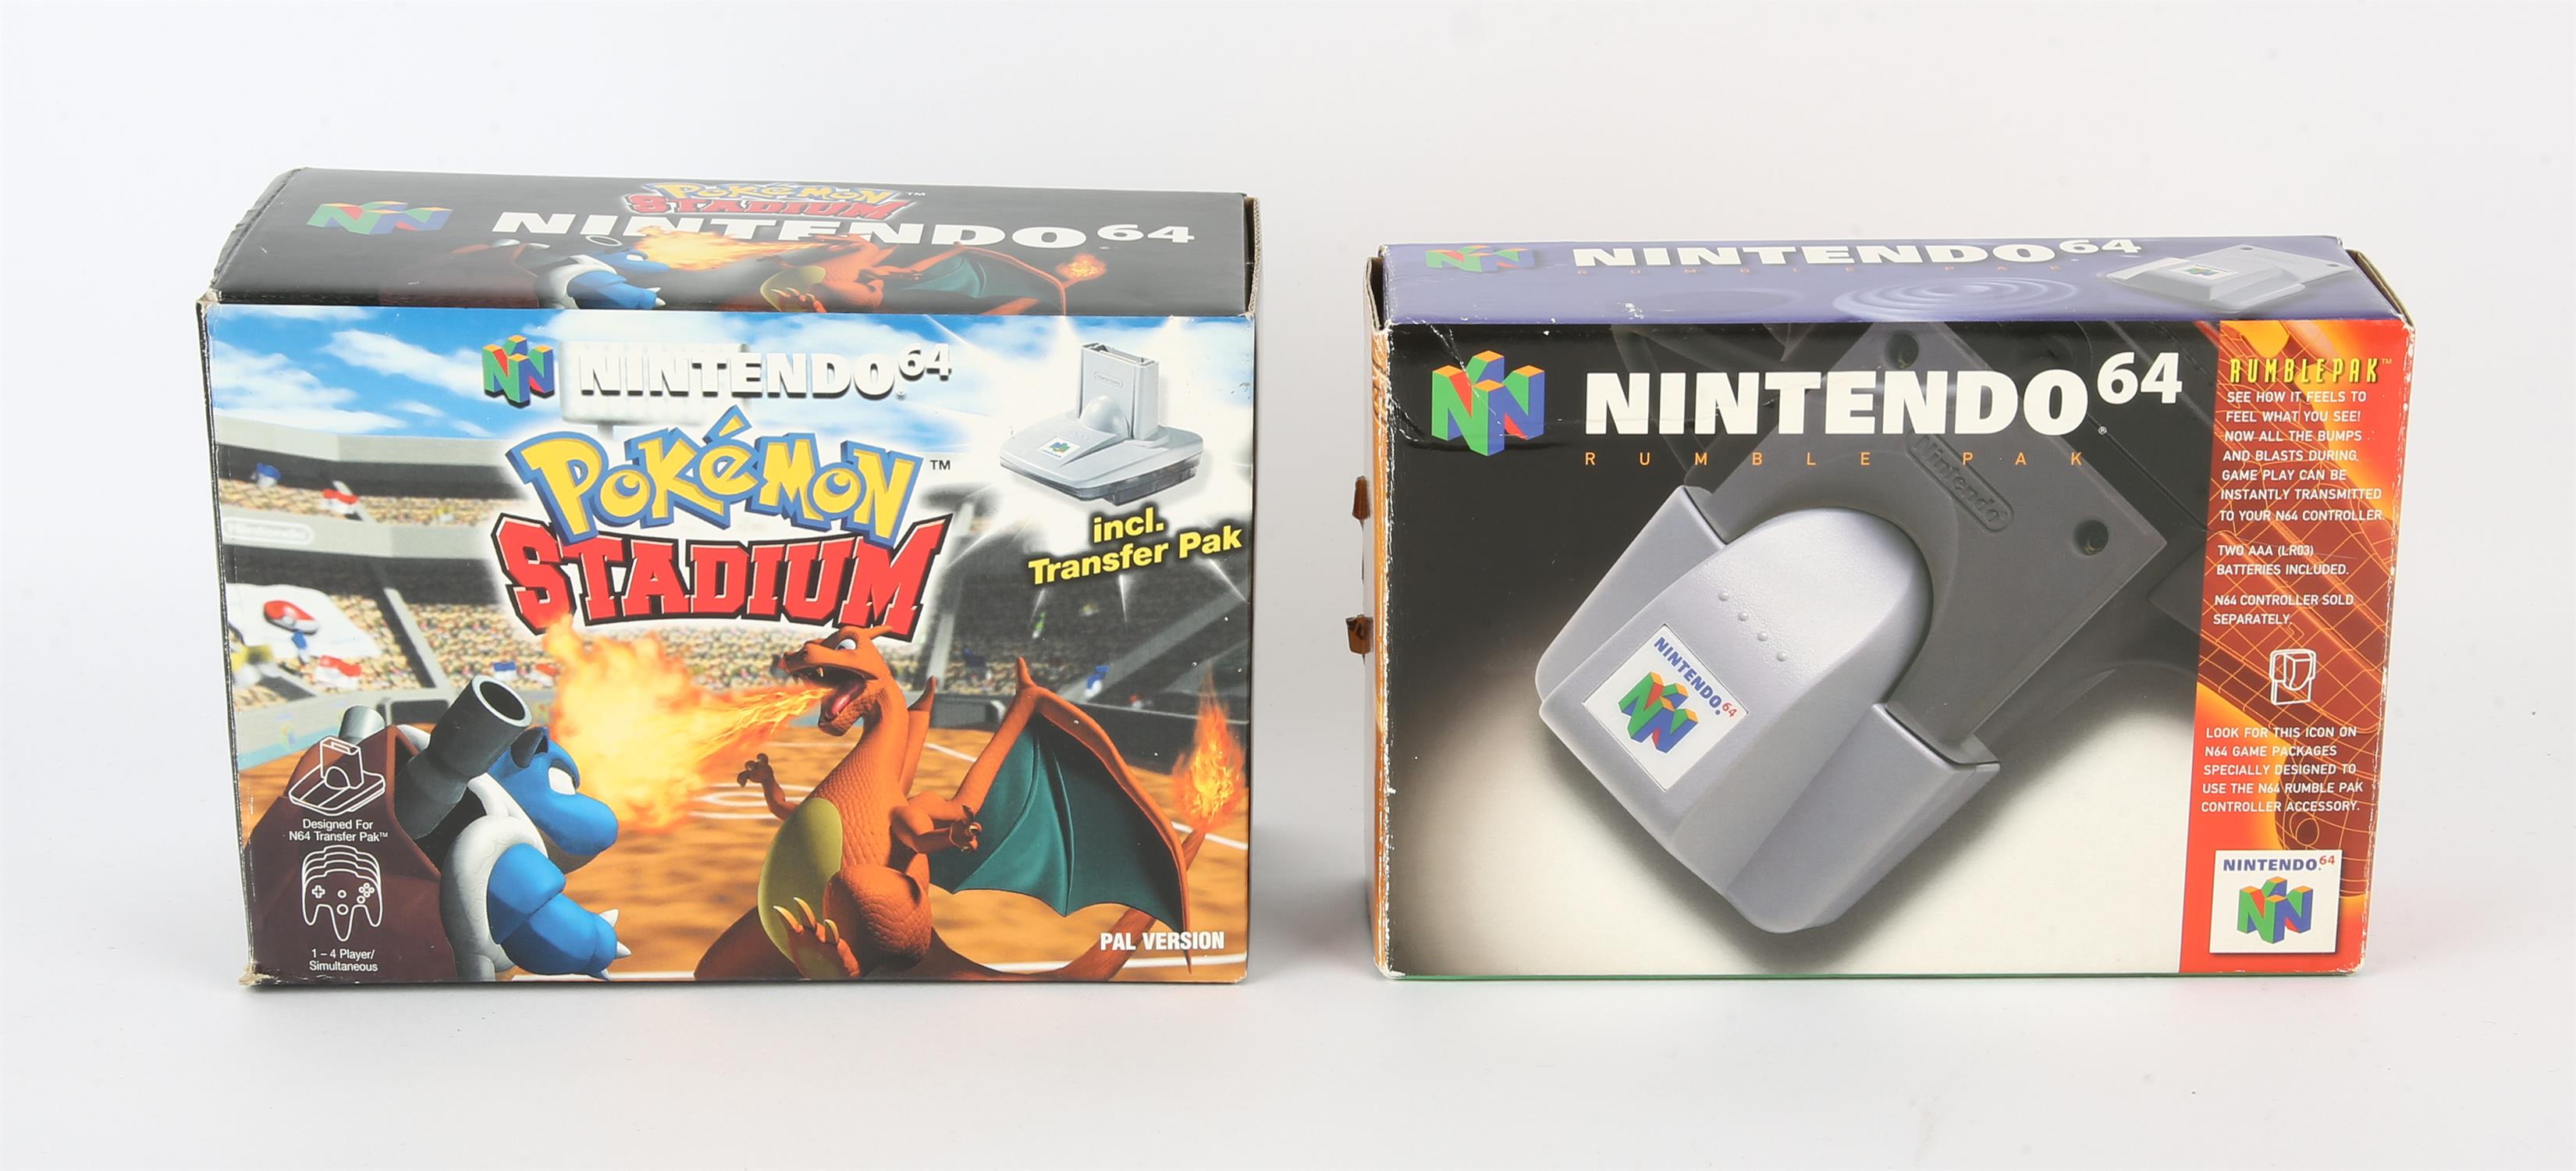 Nintendo 64 (N64) Pokémon Stadium game (including Transfer Pak) & official Rumble Pak (PAL)